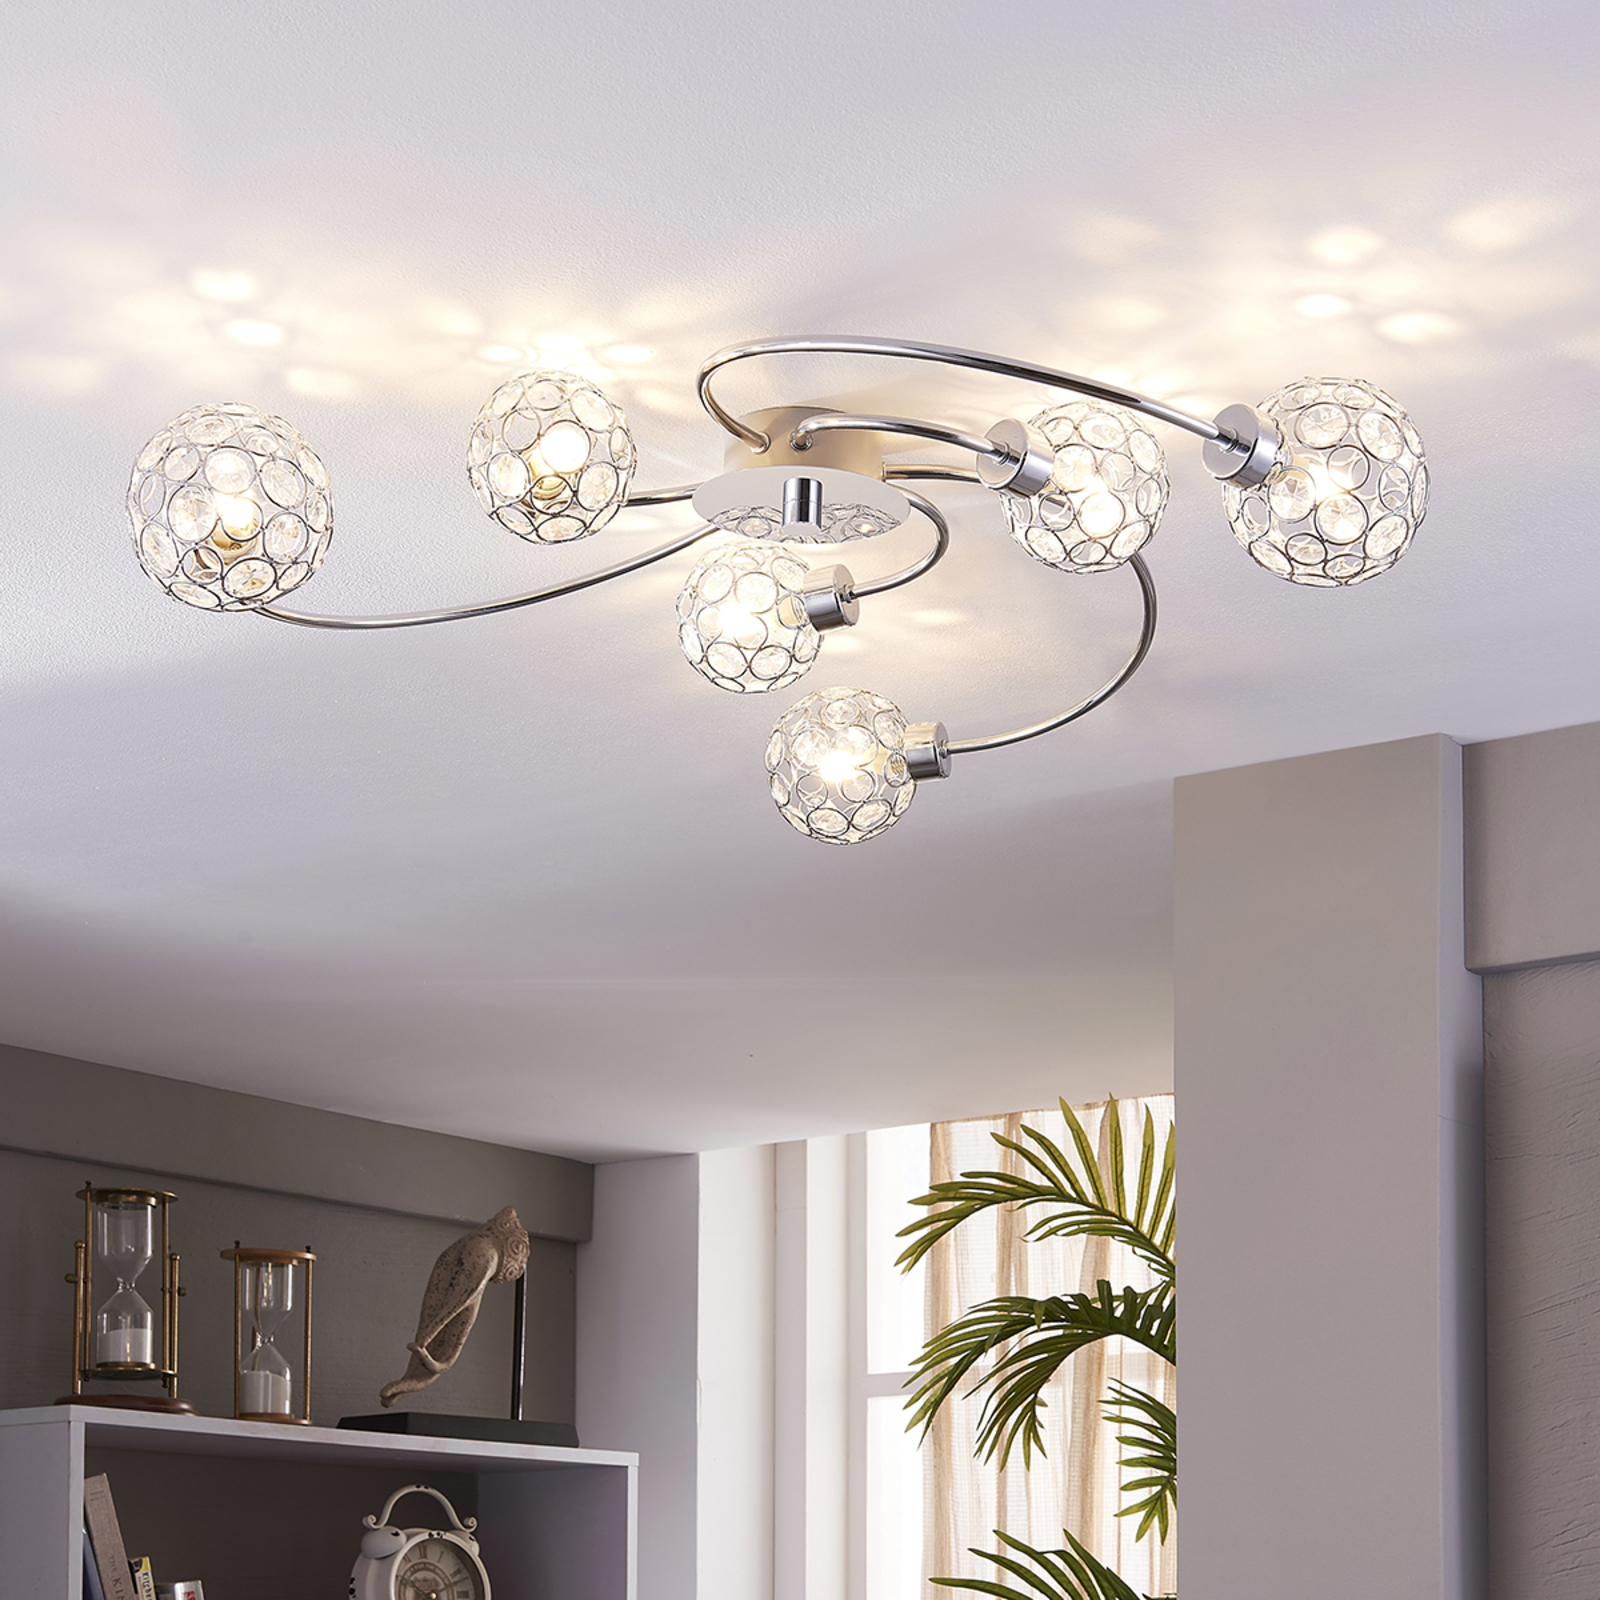 Tyron decorative ceiling light